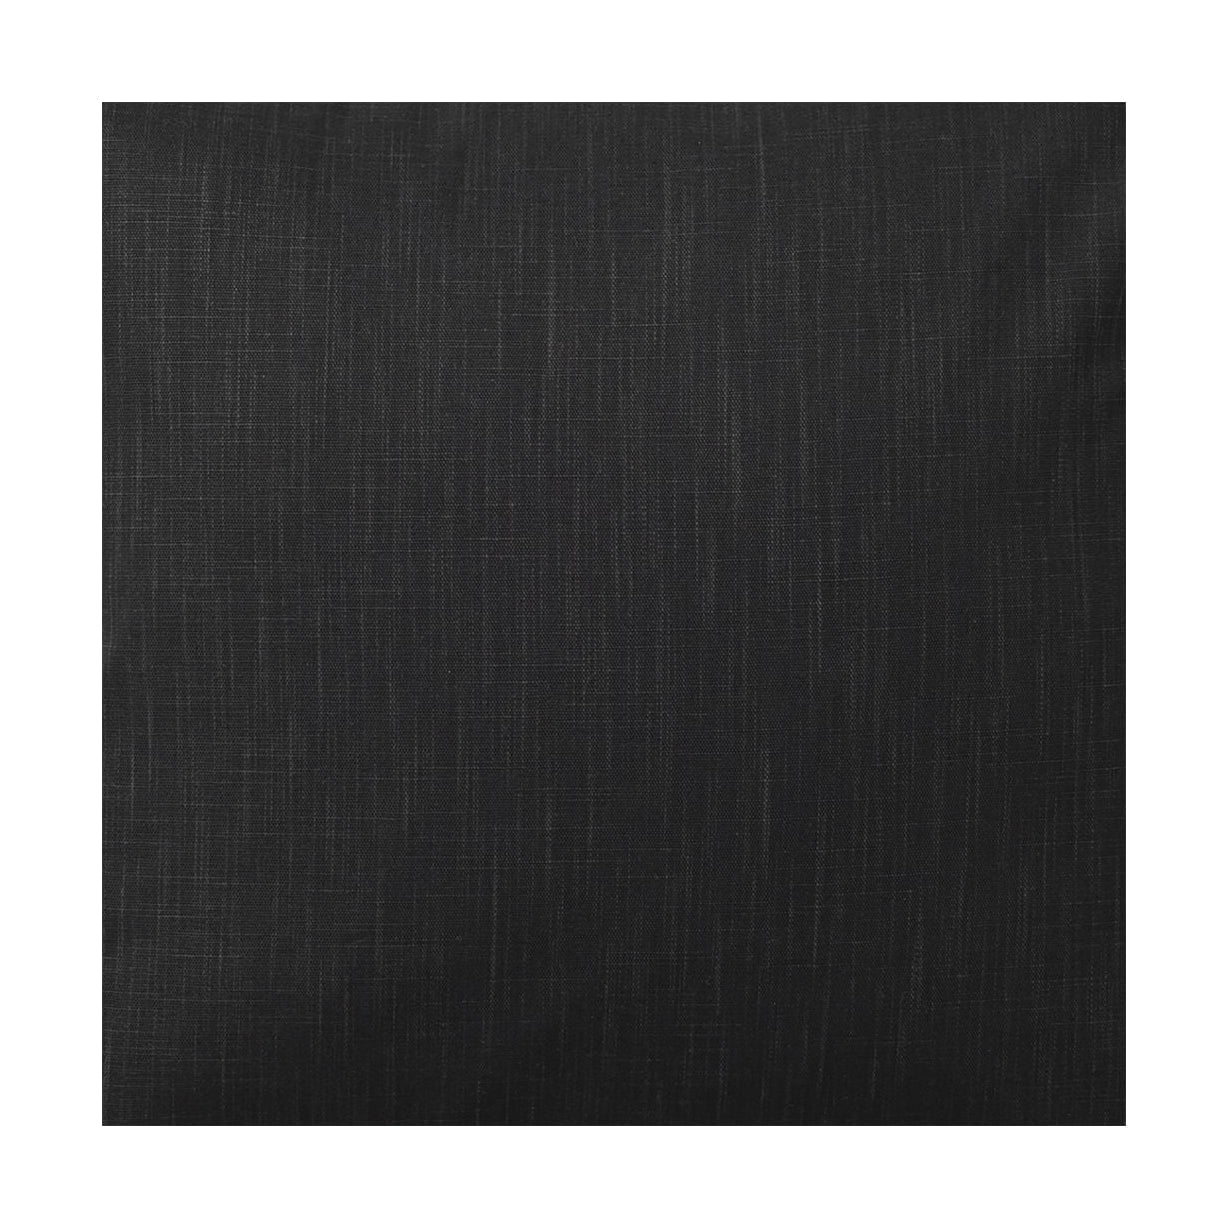 Spira Klotz Fabric Width 150 Cm (Price Per Meter), Asphalt